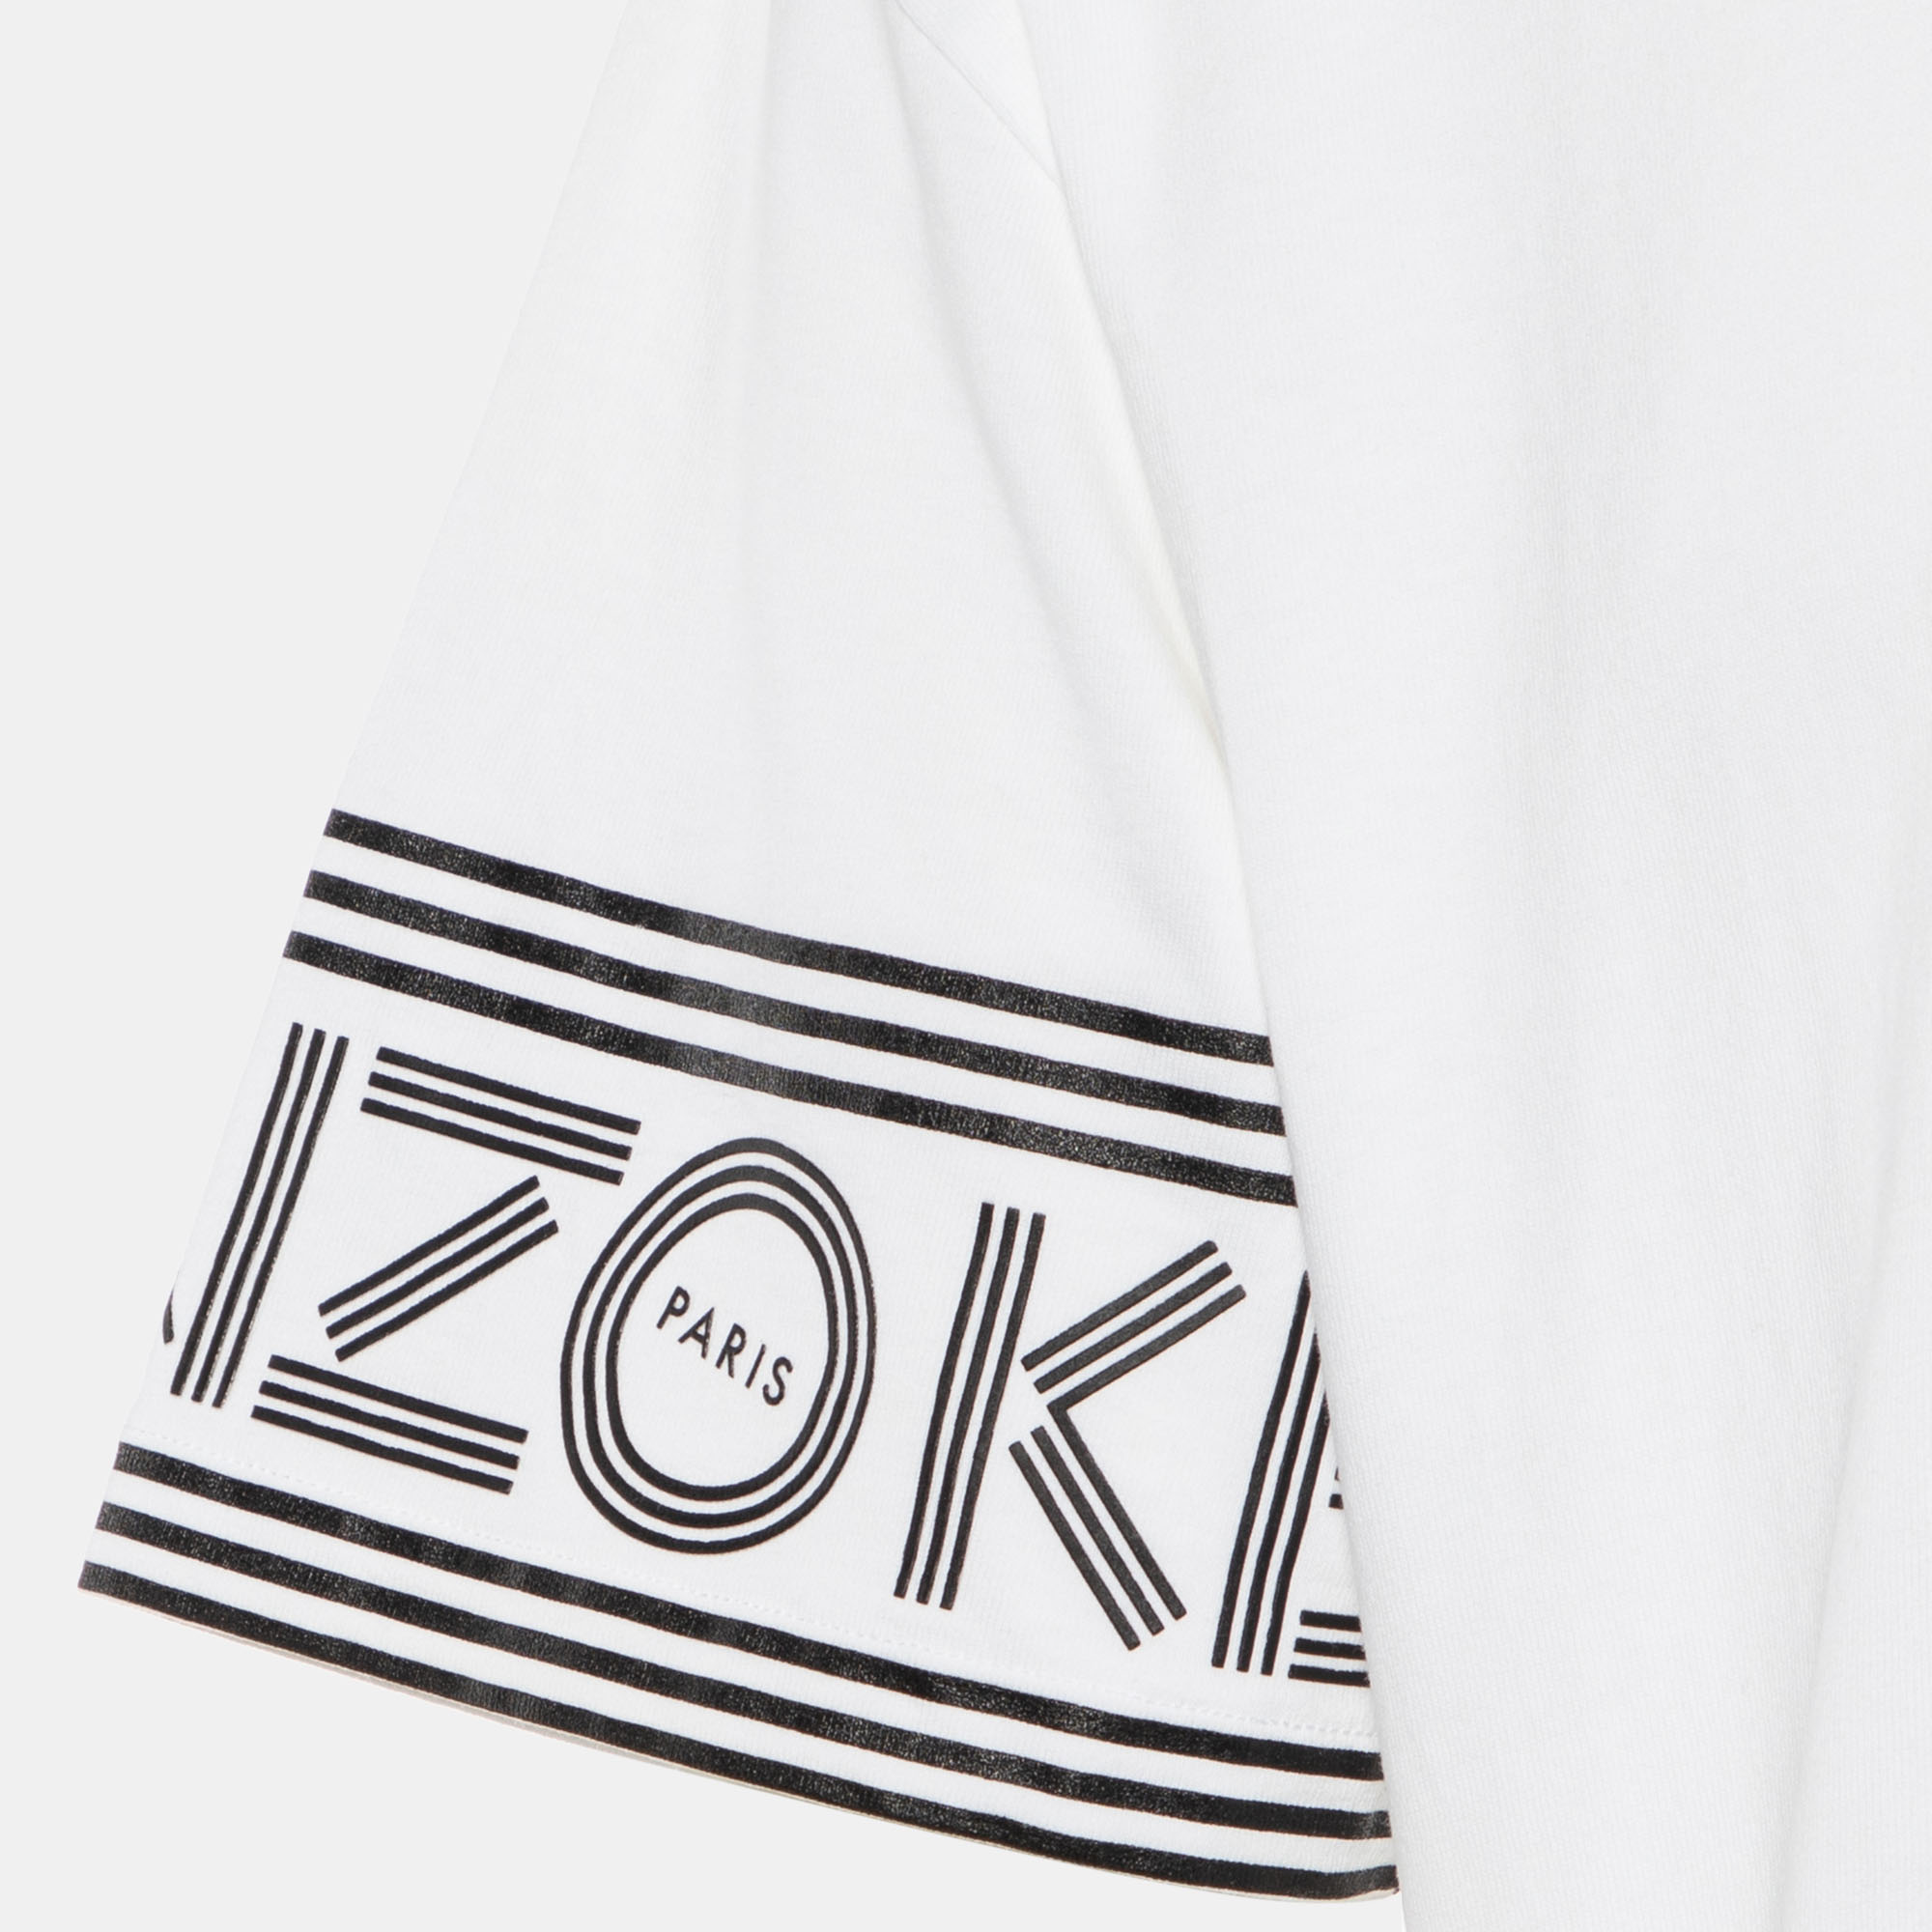 Kenzo White Cotton Knit Logo Printed Sleeve Detail T-Shirt XL